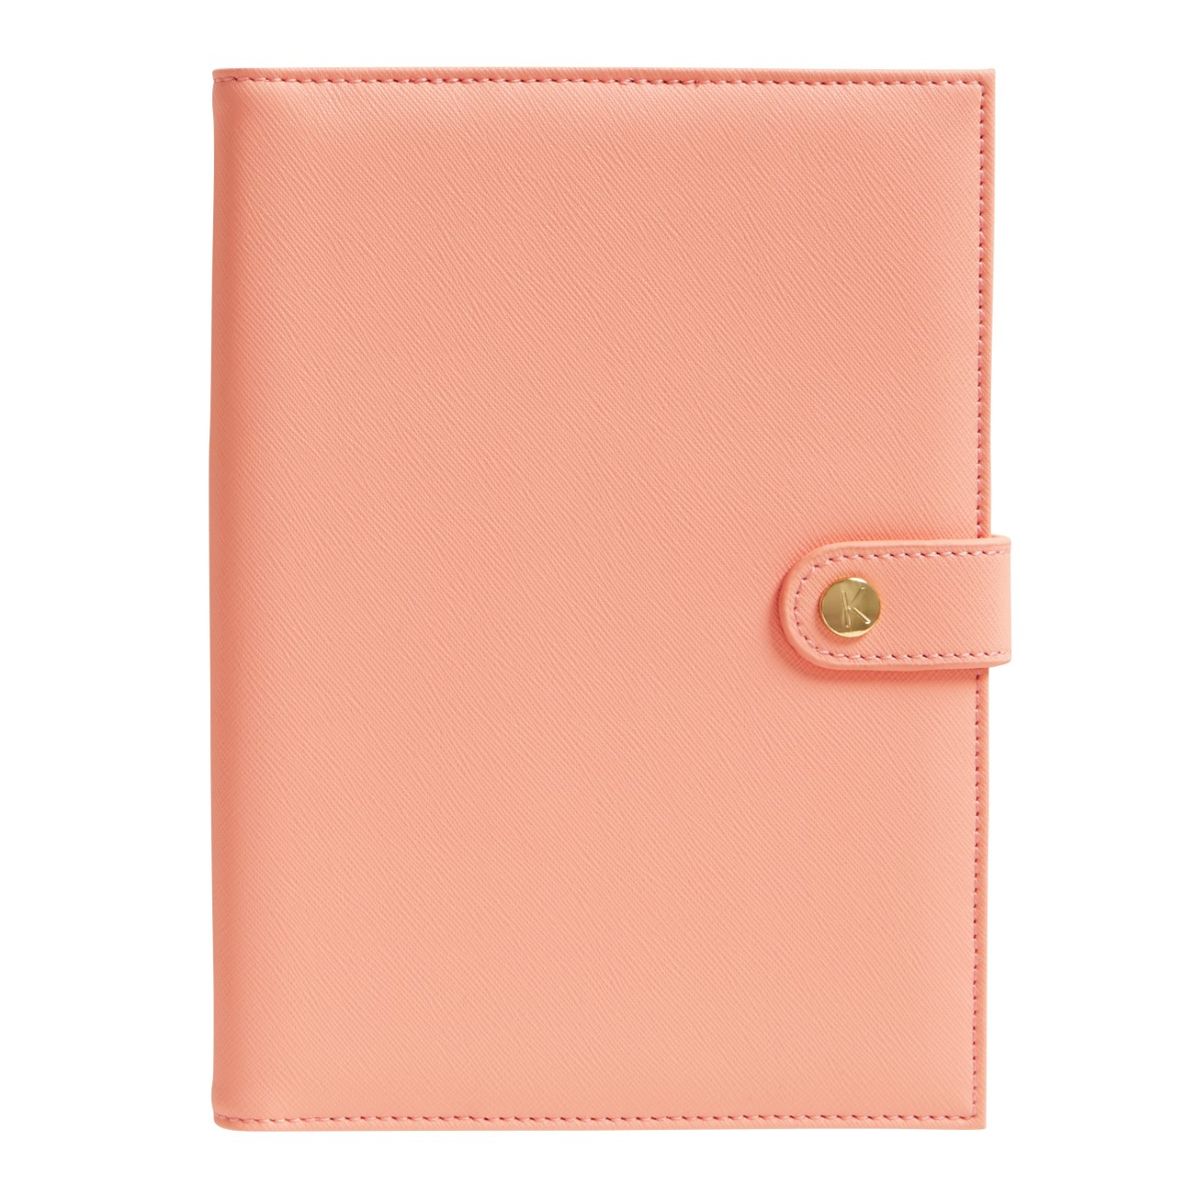 kikki.K A5 Leather Notebook Holder Luxury Coral